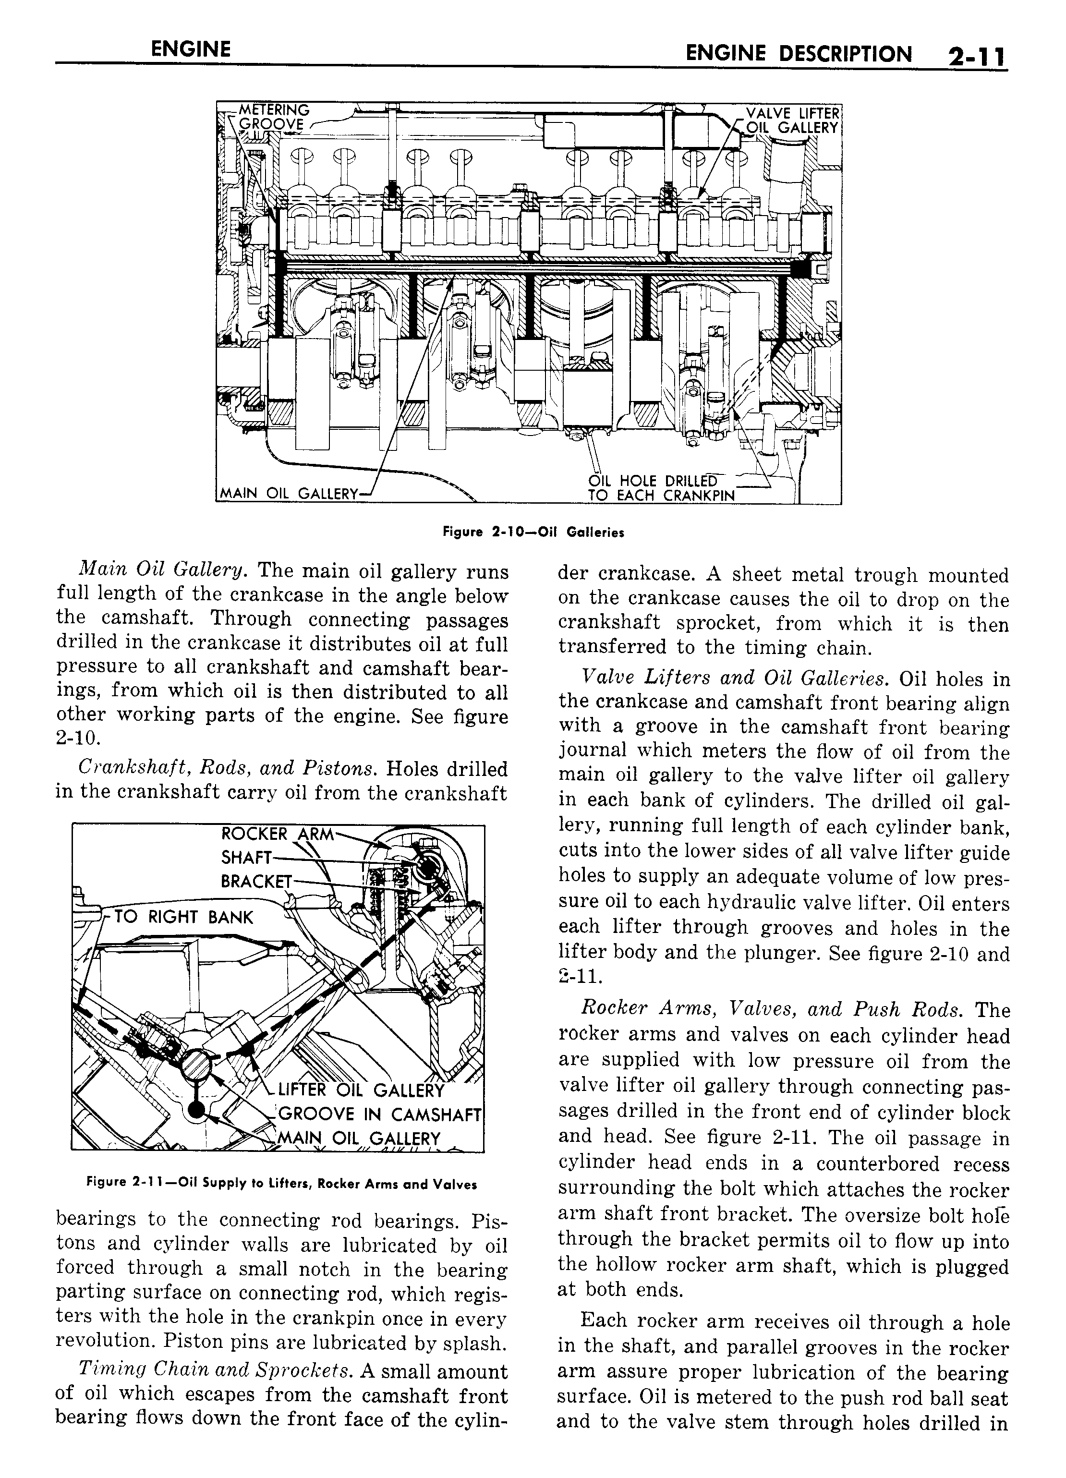 n_03 1957 Buick Shop Manual - Engine-011-011.jpg